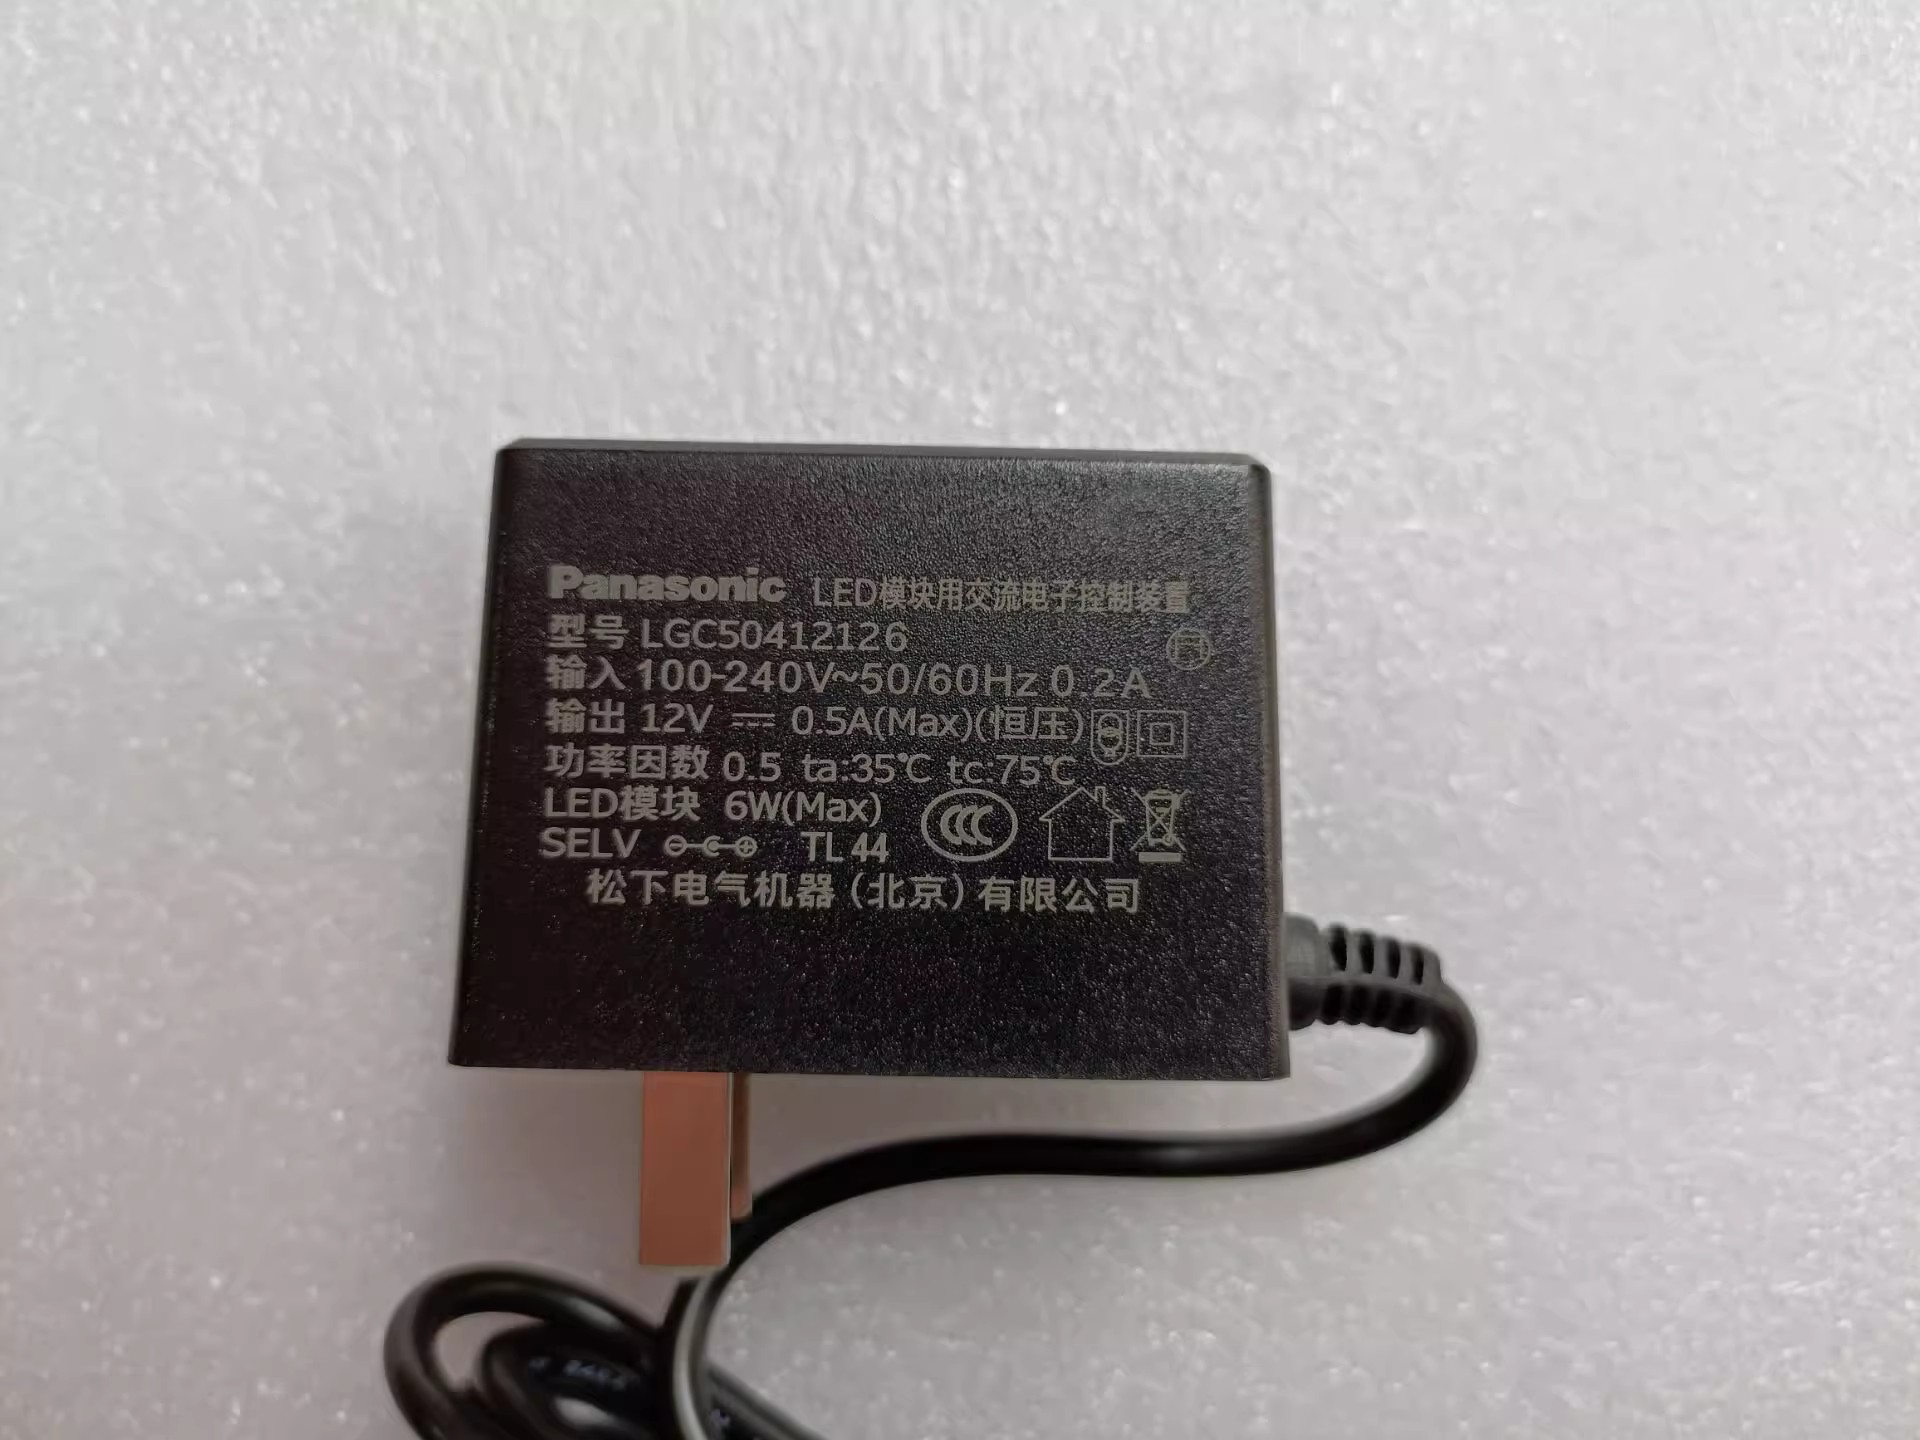 *Brand NEW* Panasonic LED LGC50412126 12V 0.5A AC DC ADAPTHE POWER Supply